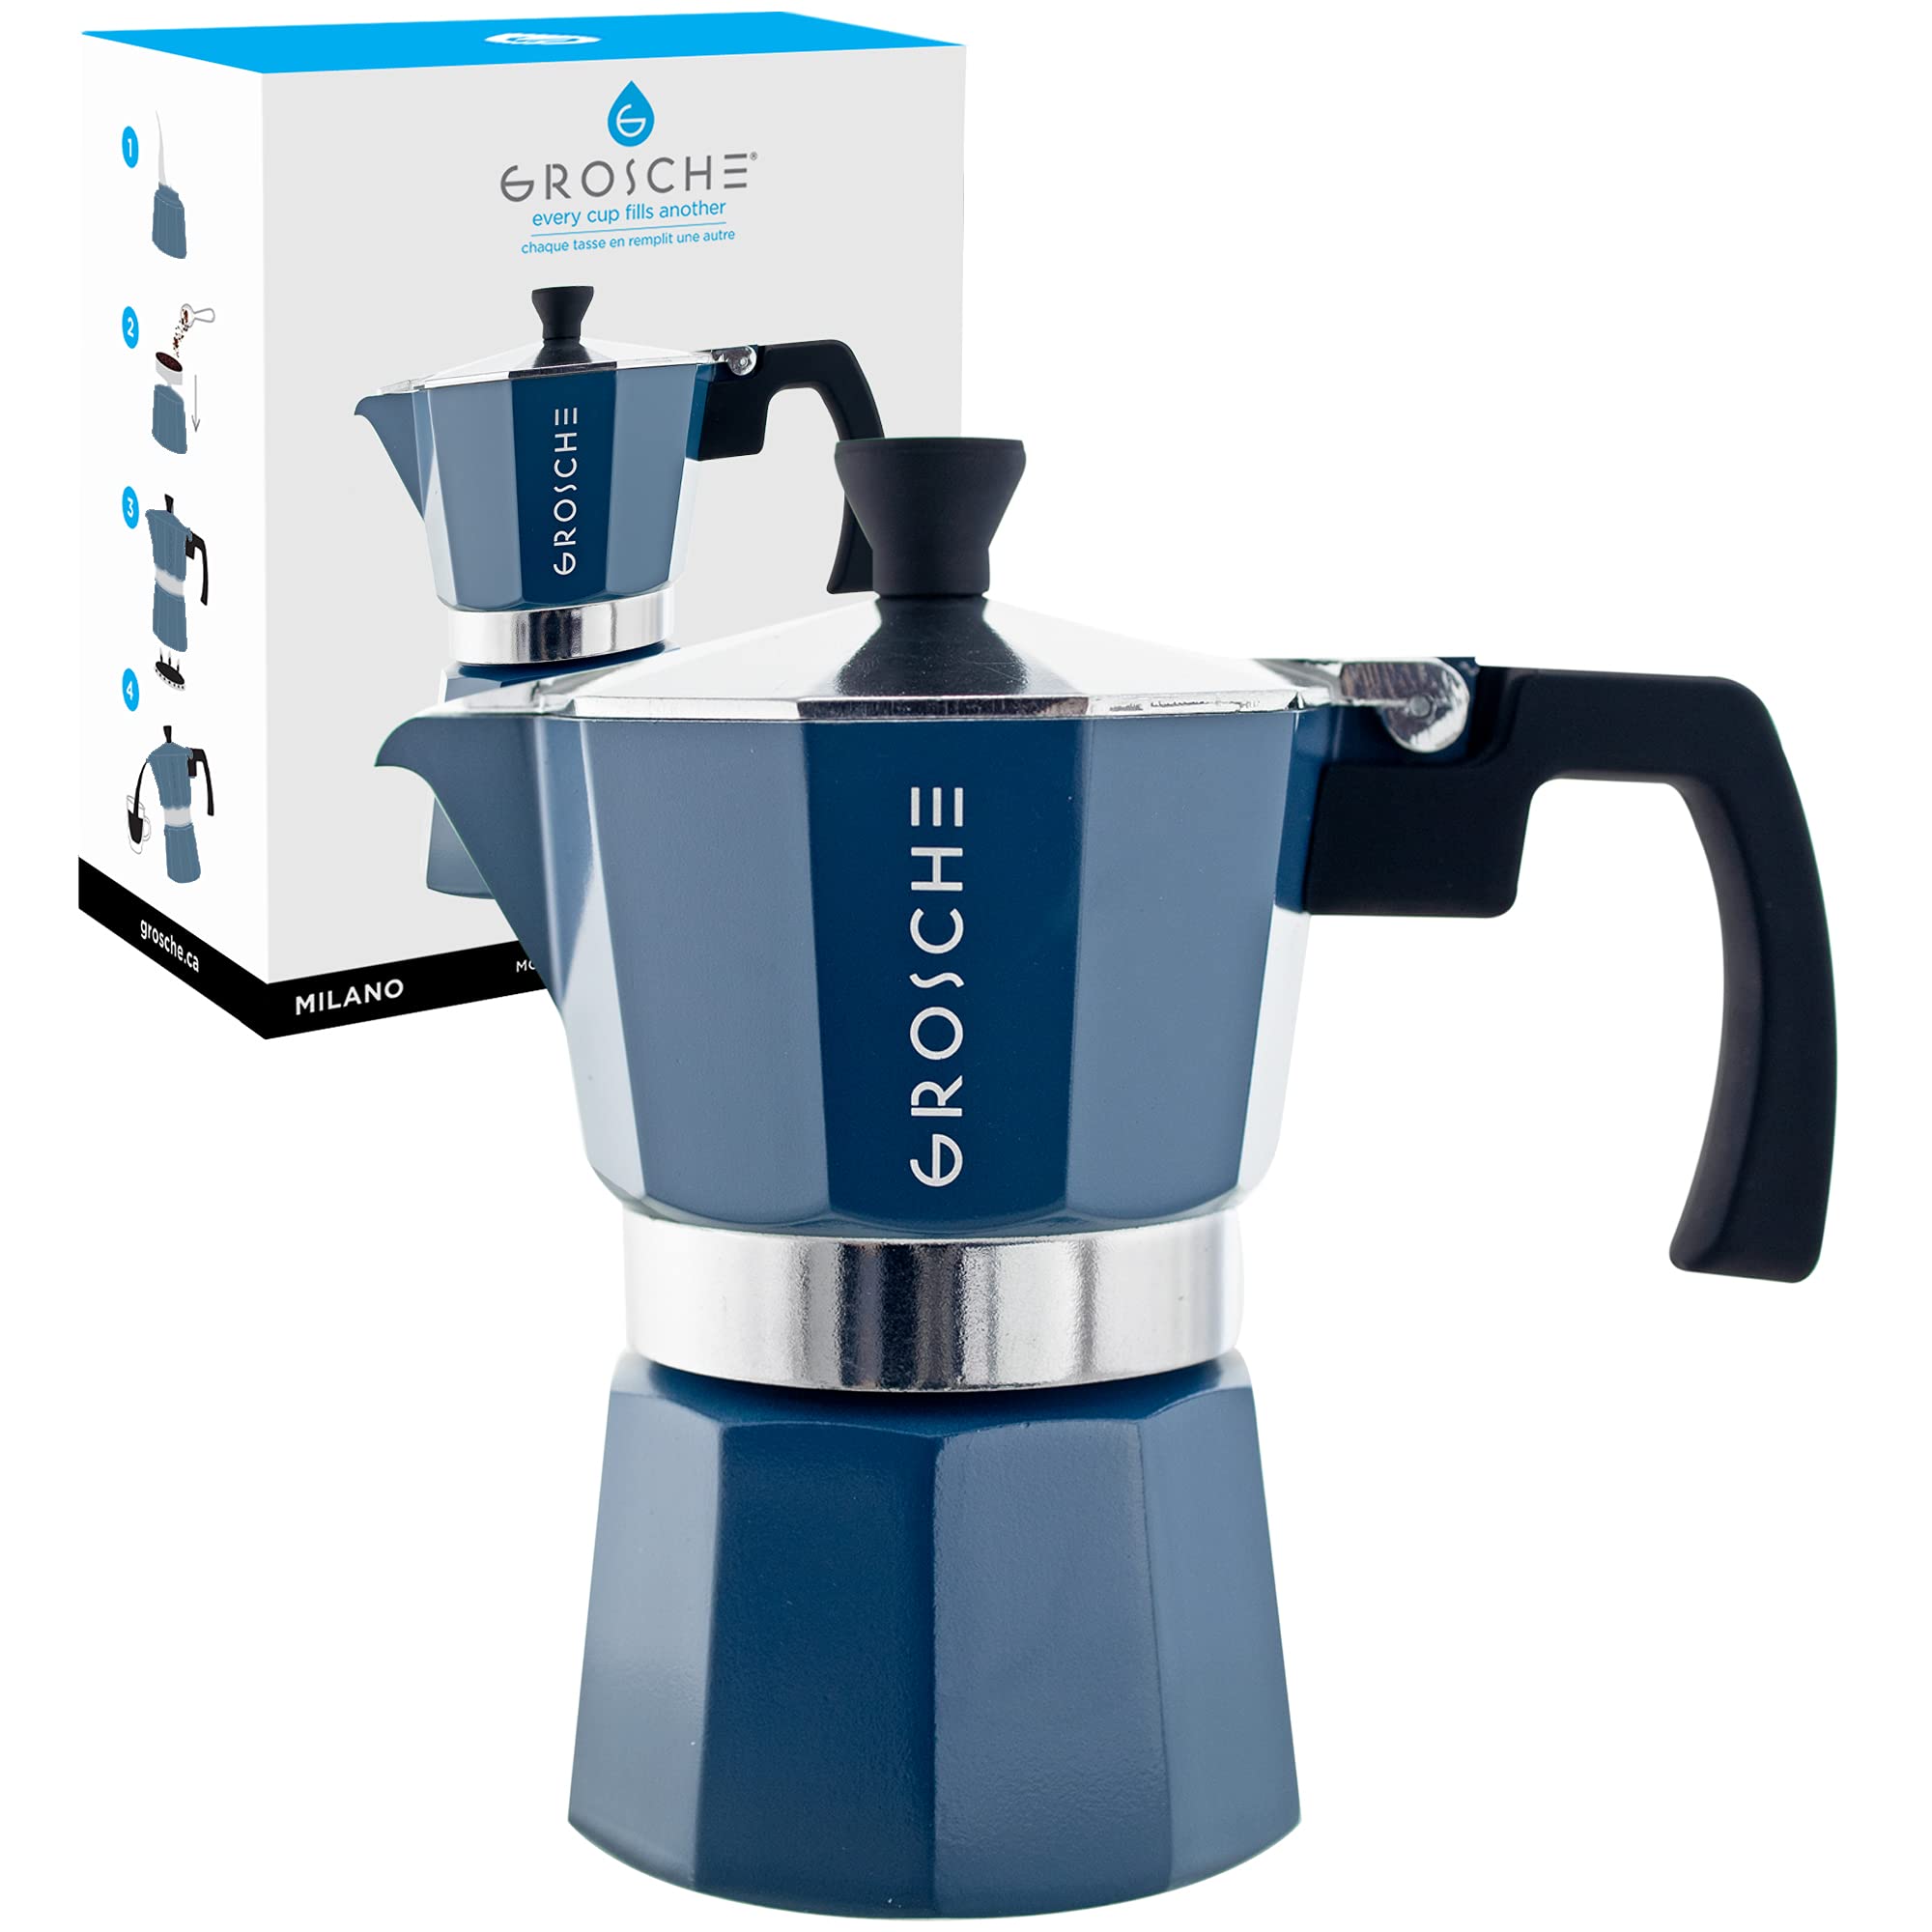 GROSCHE Milano Stovetop Espresso Maker Moka Pot 3 espresso Cup - 5 oz, Blue